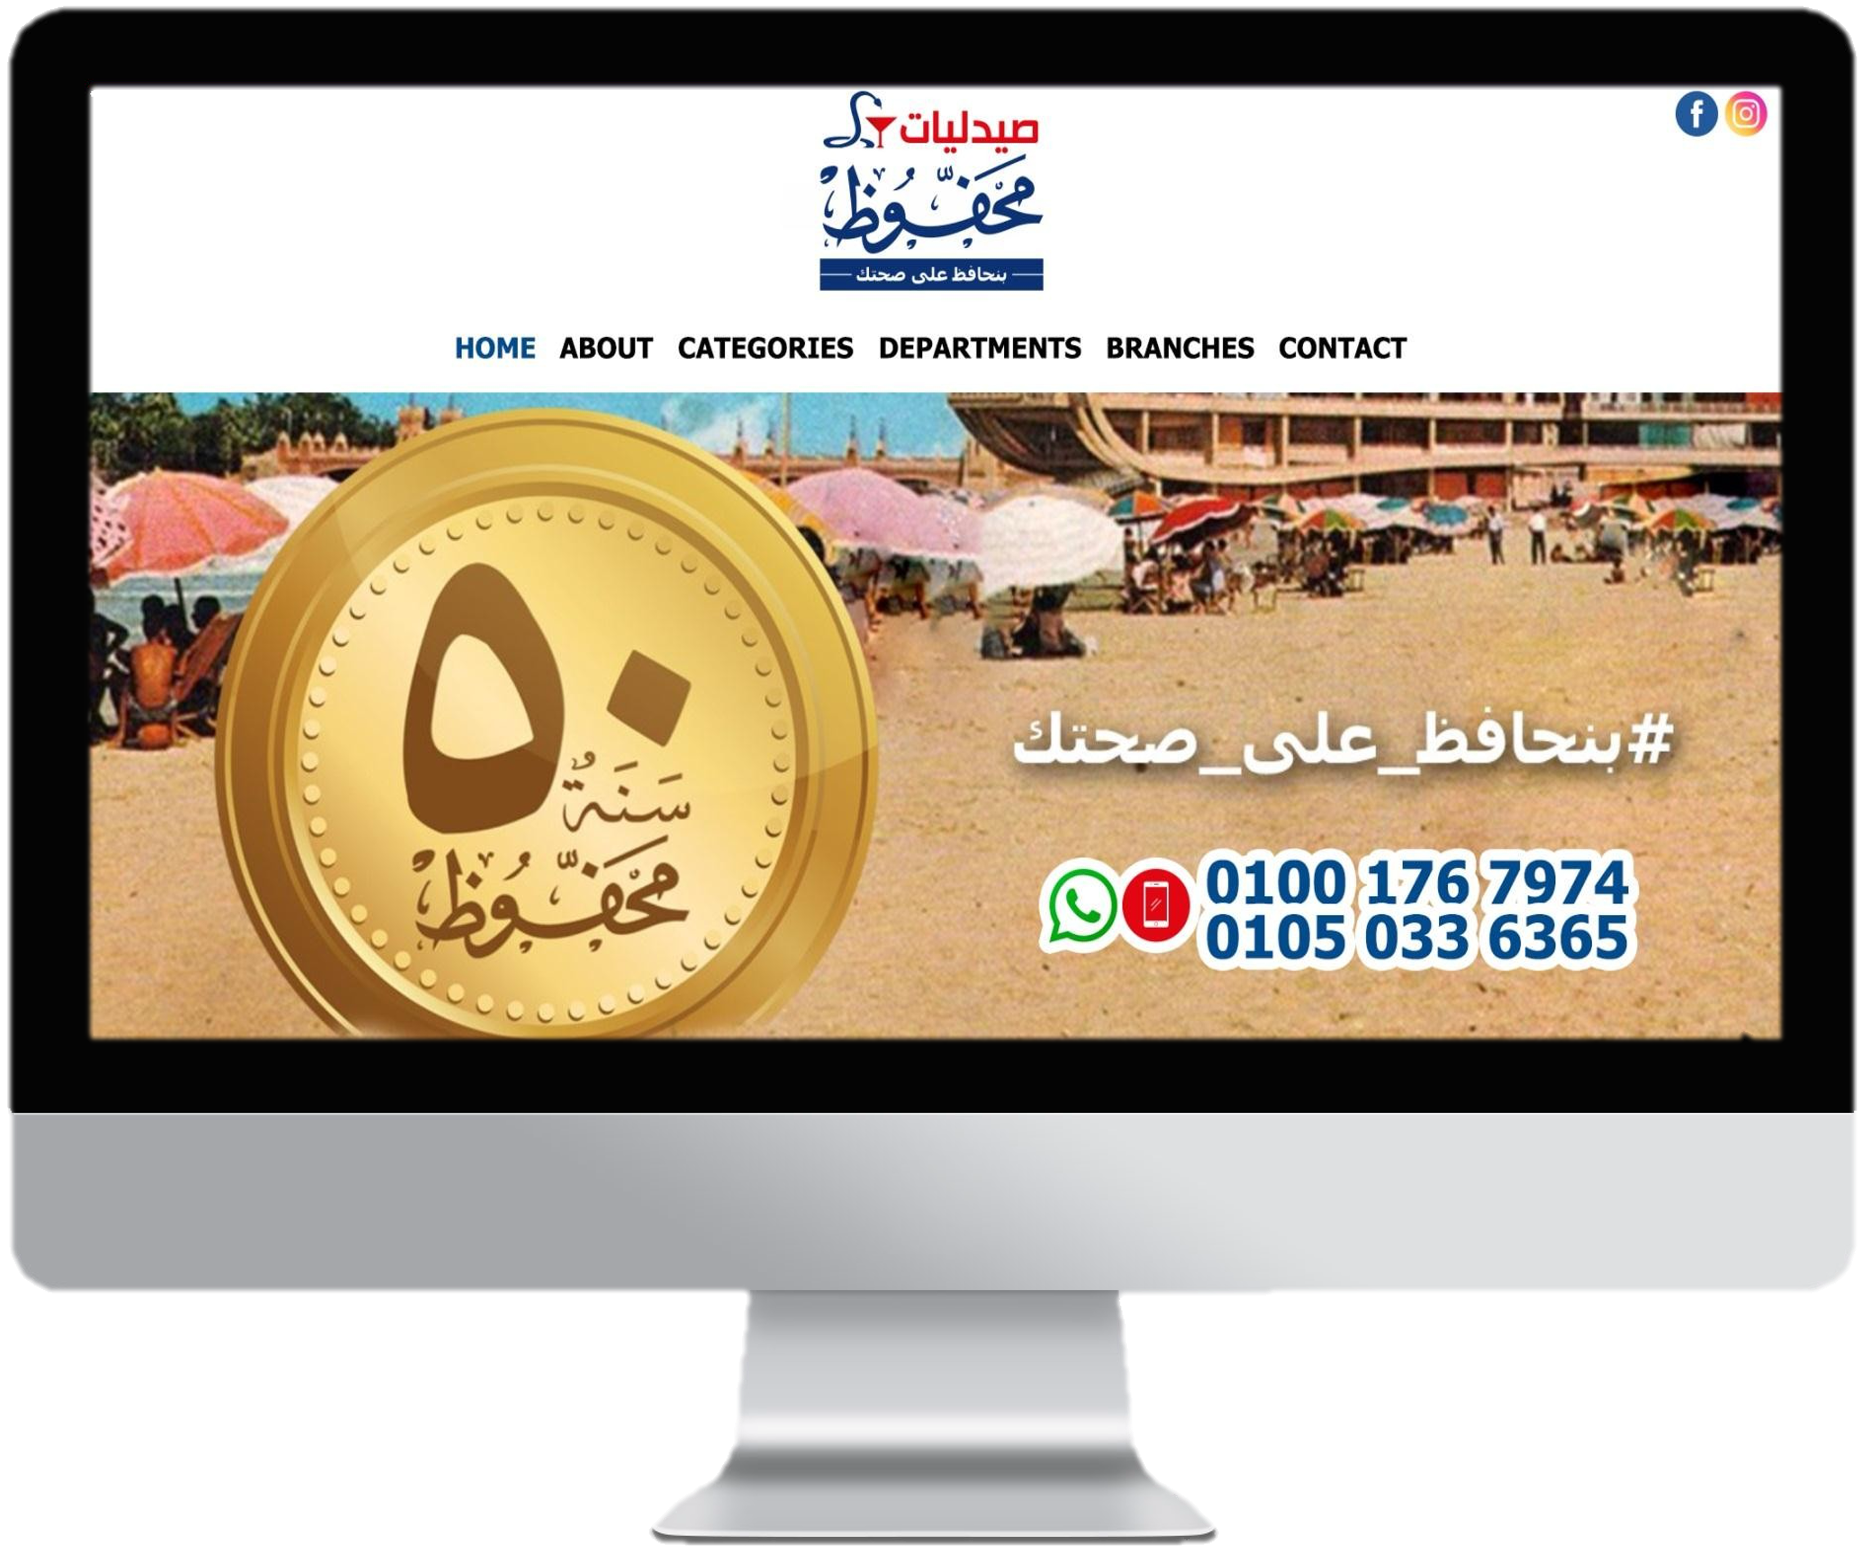 mahfouz website sample